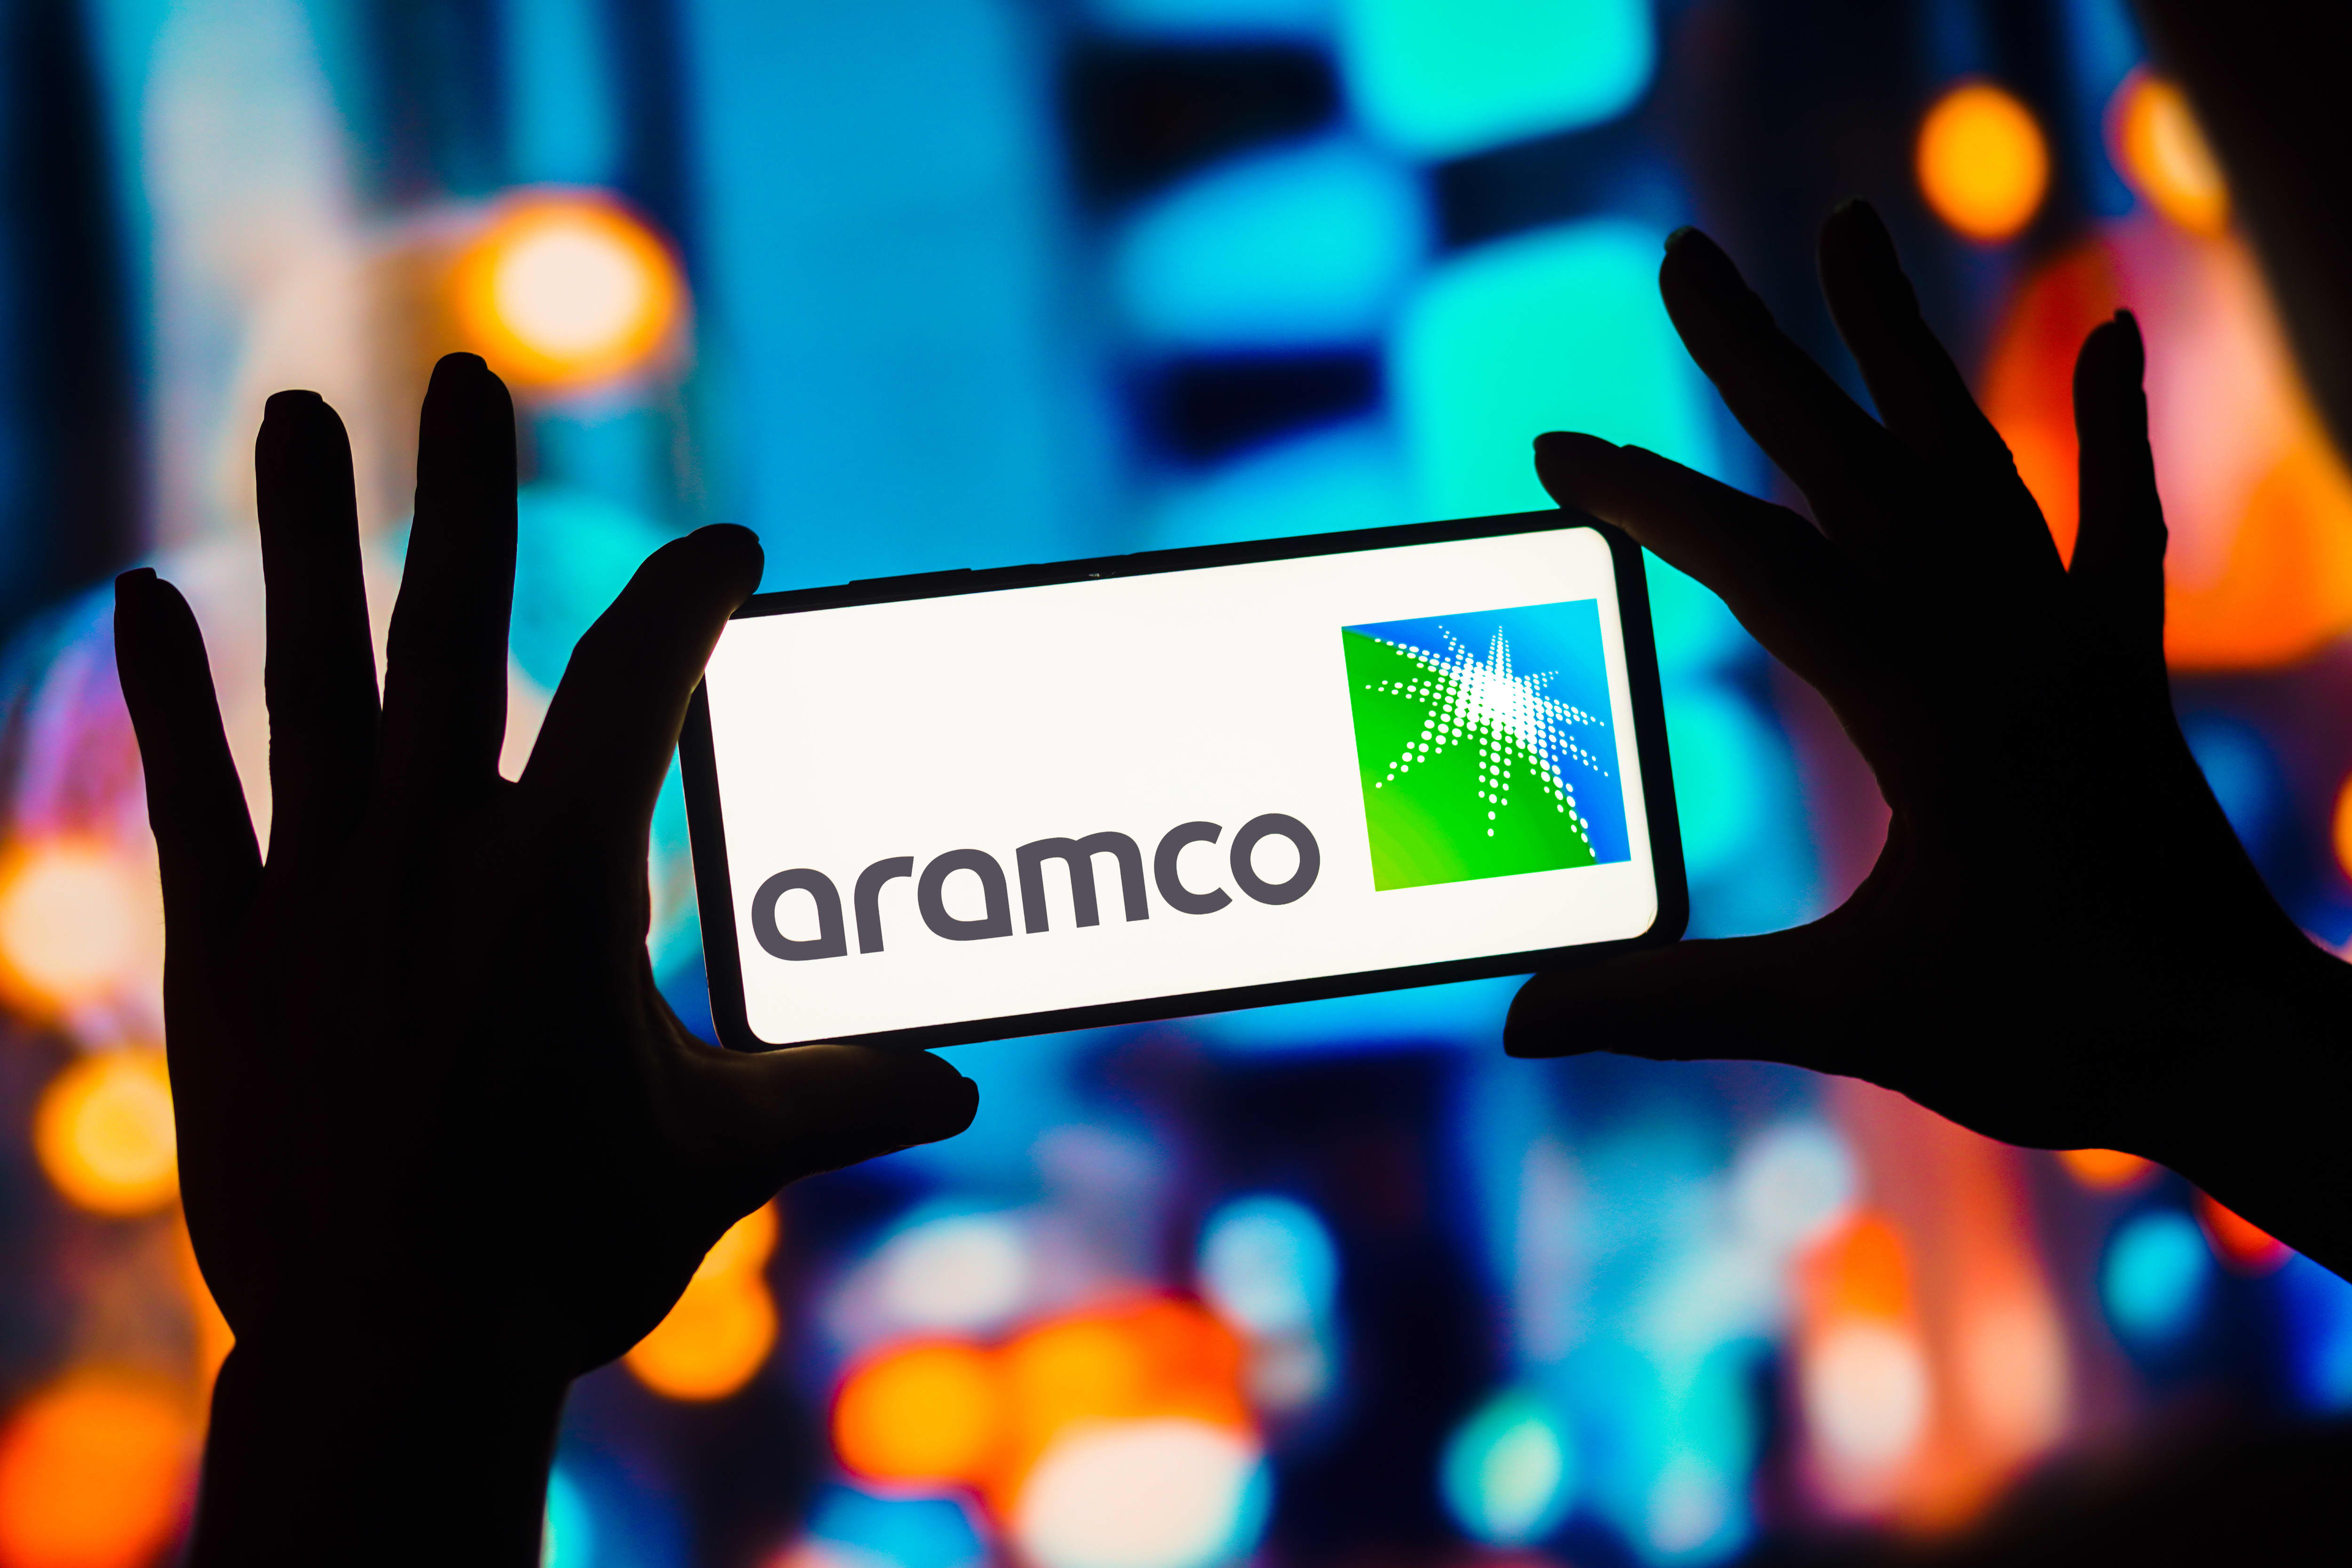 Saudi oil giant Aramco has a record 1 billion profit for 2022